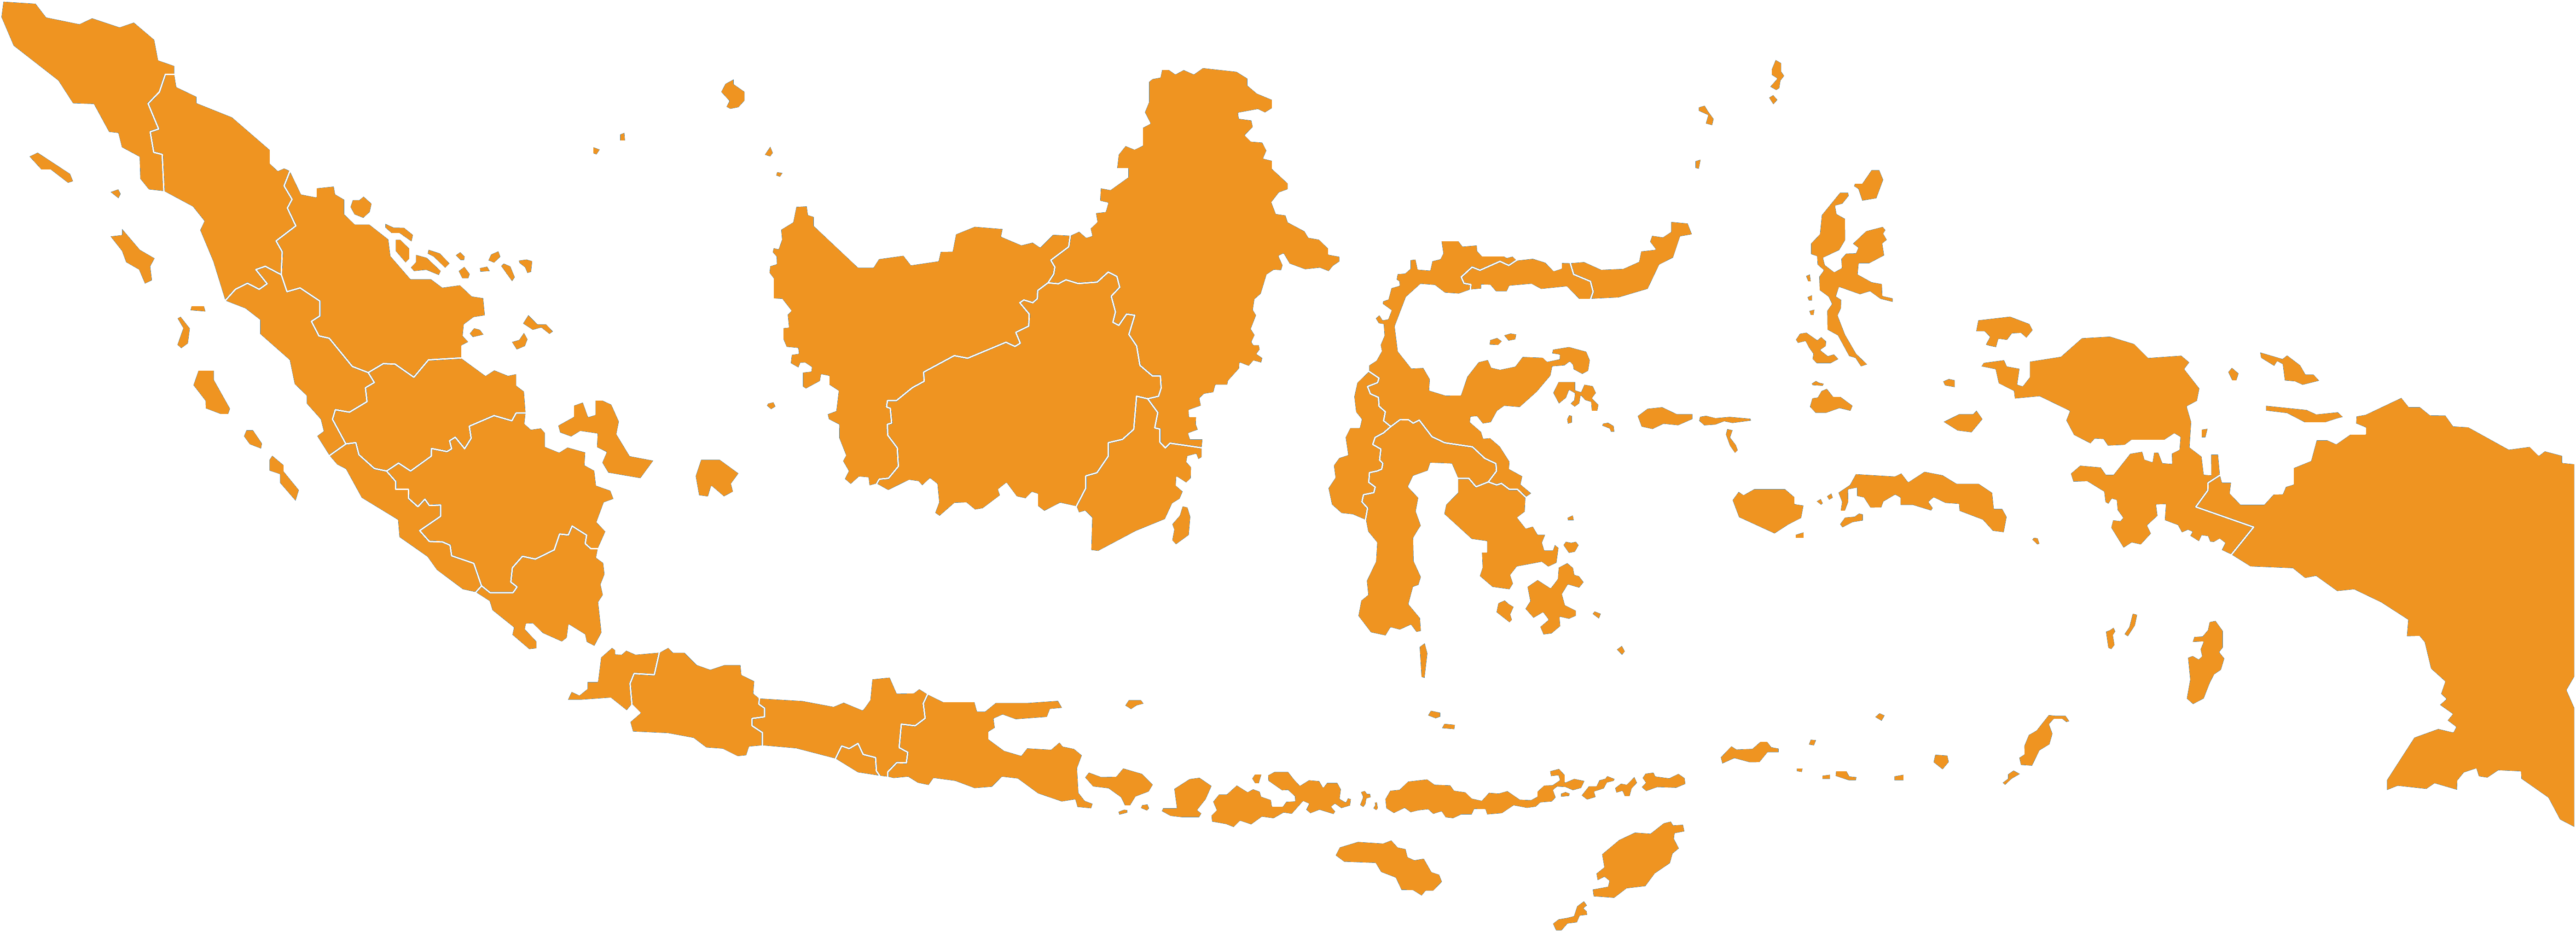 aplikasi monografi Desa di Indonesia